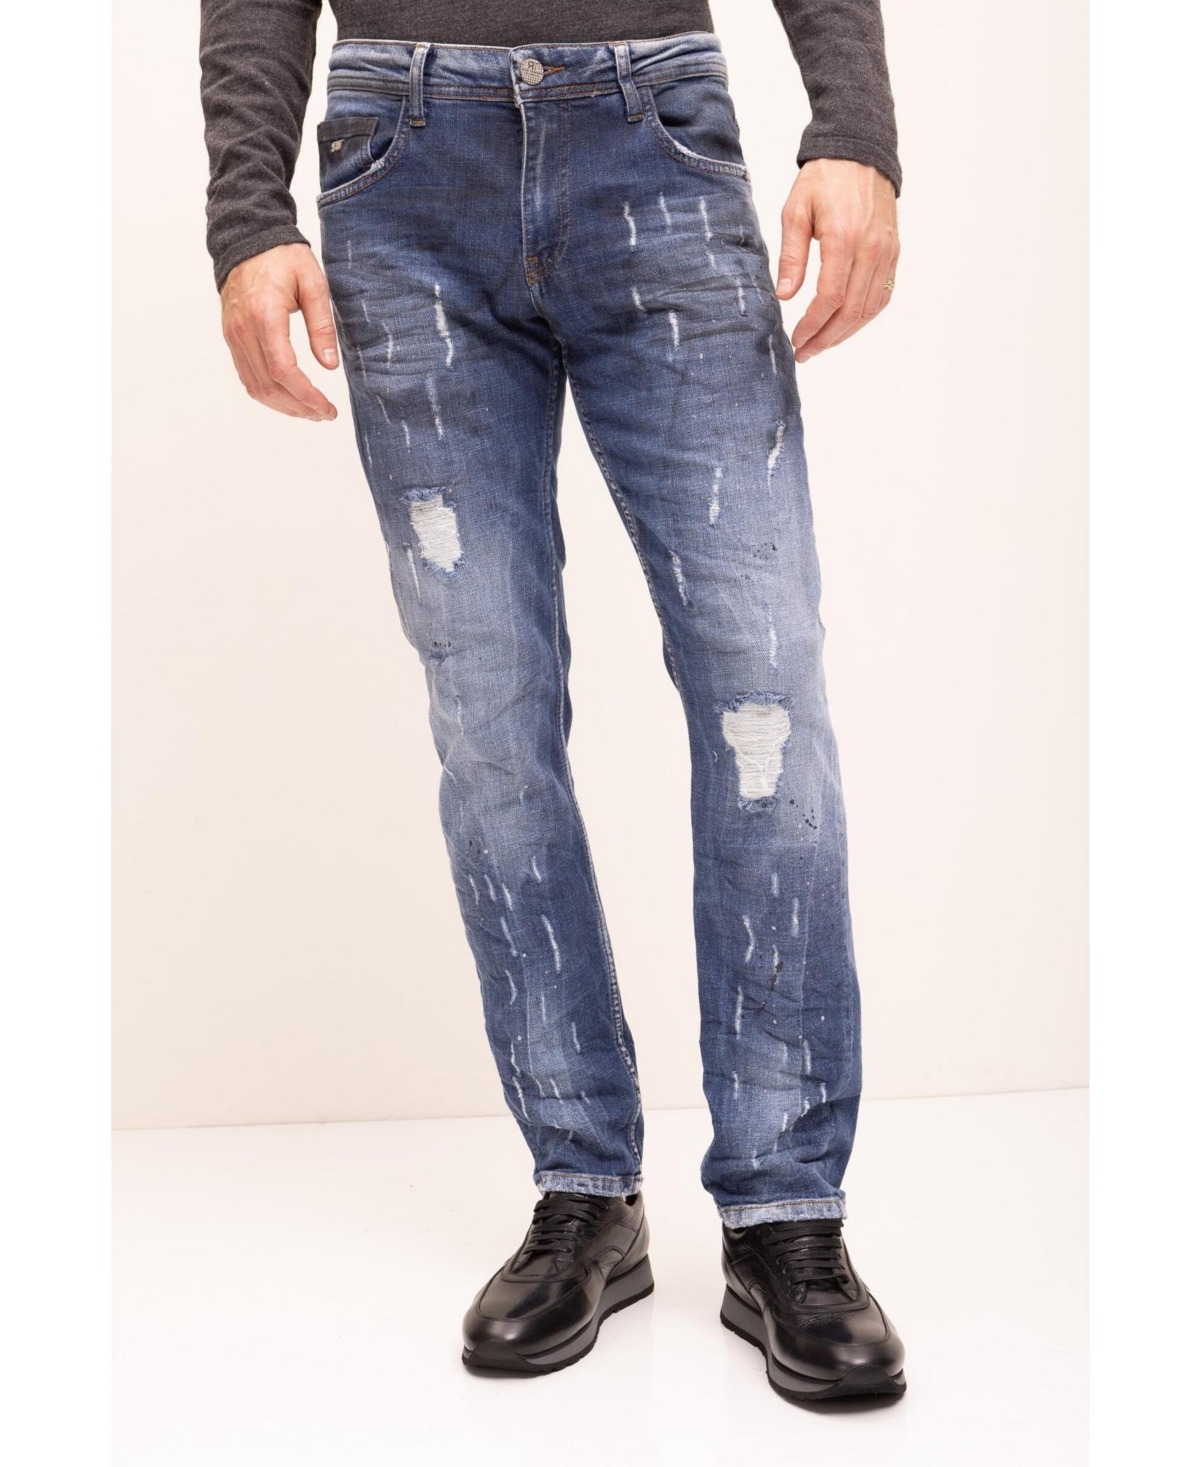 Men's Modern Distressed Denim Jeans - Ice Blue